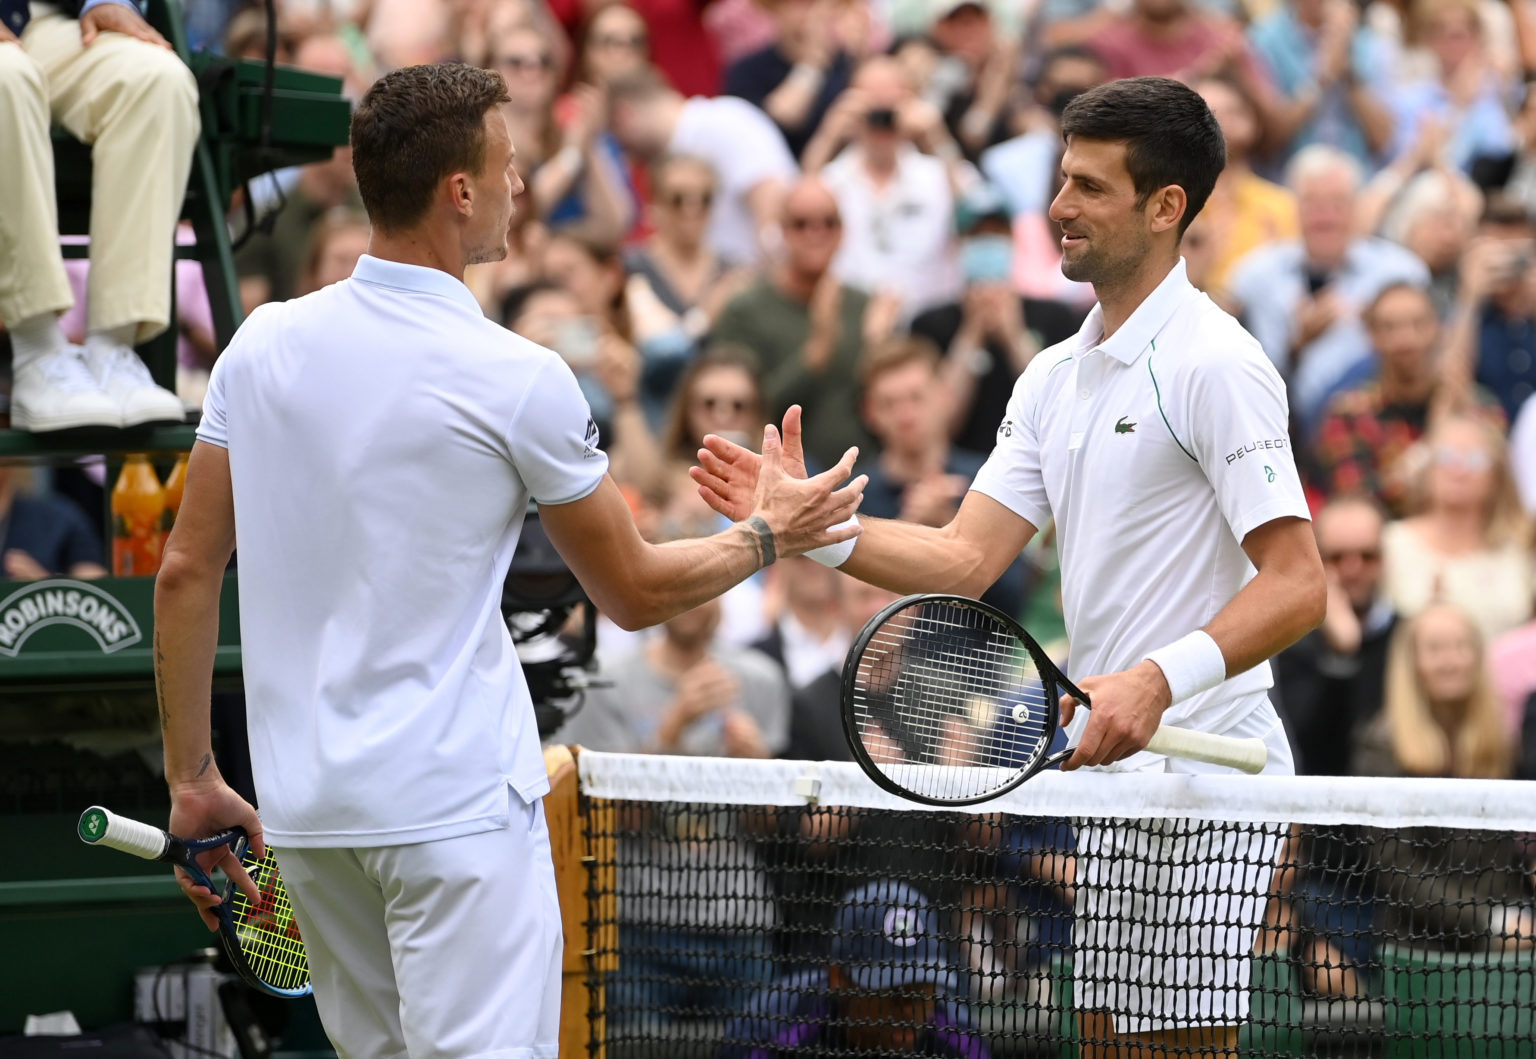 Djokovic ends Fucsovics run to reach 10th Wimbledon semifinal